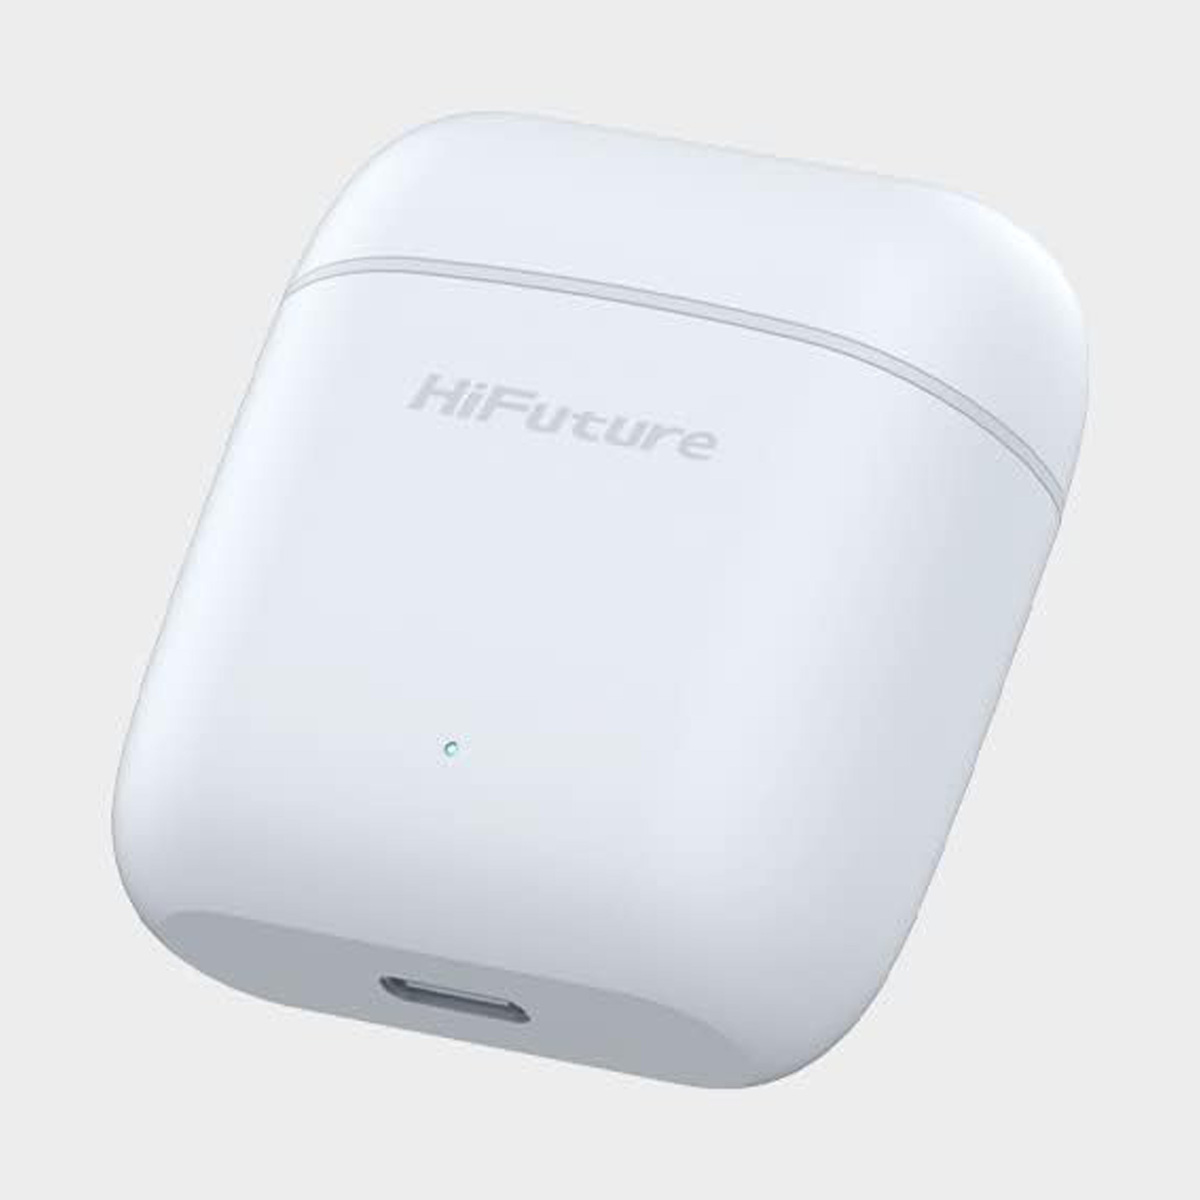 Hifuture FlyBuds2 True Wireless Earbuds, White